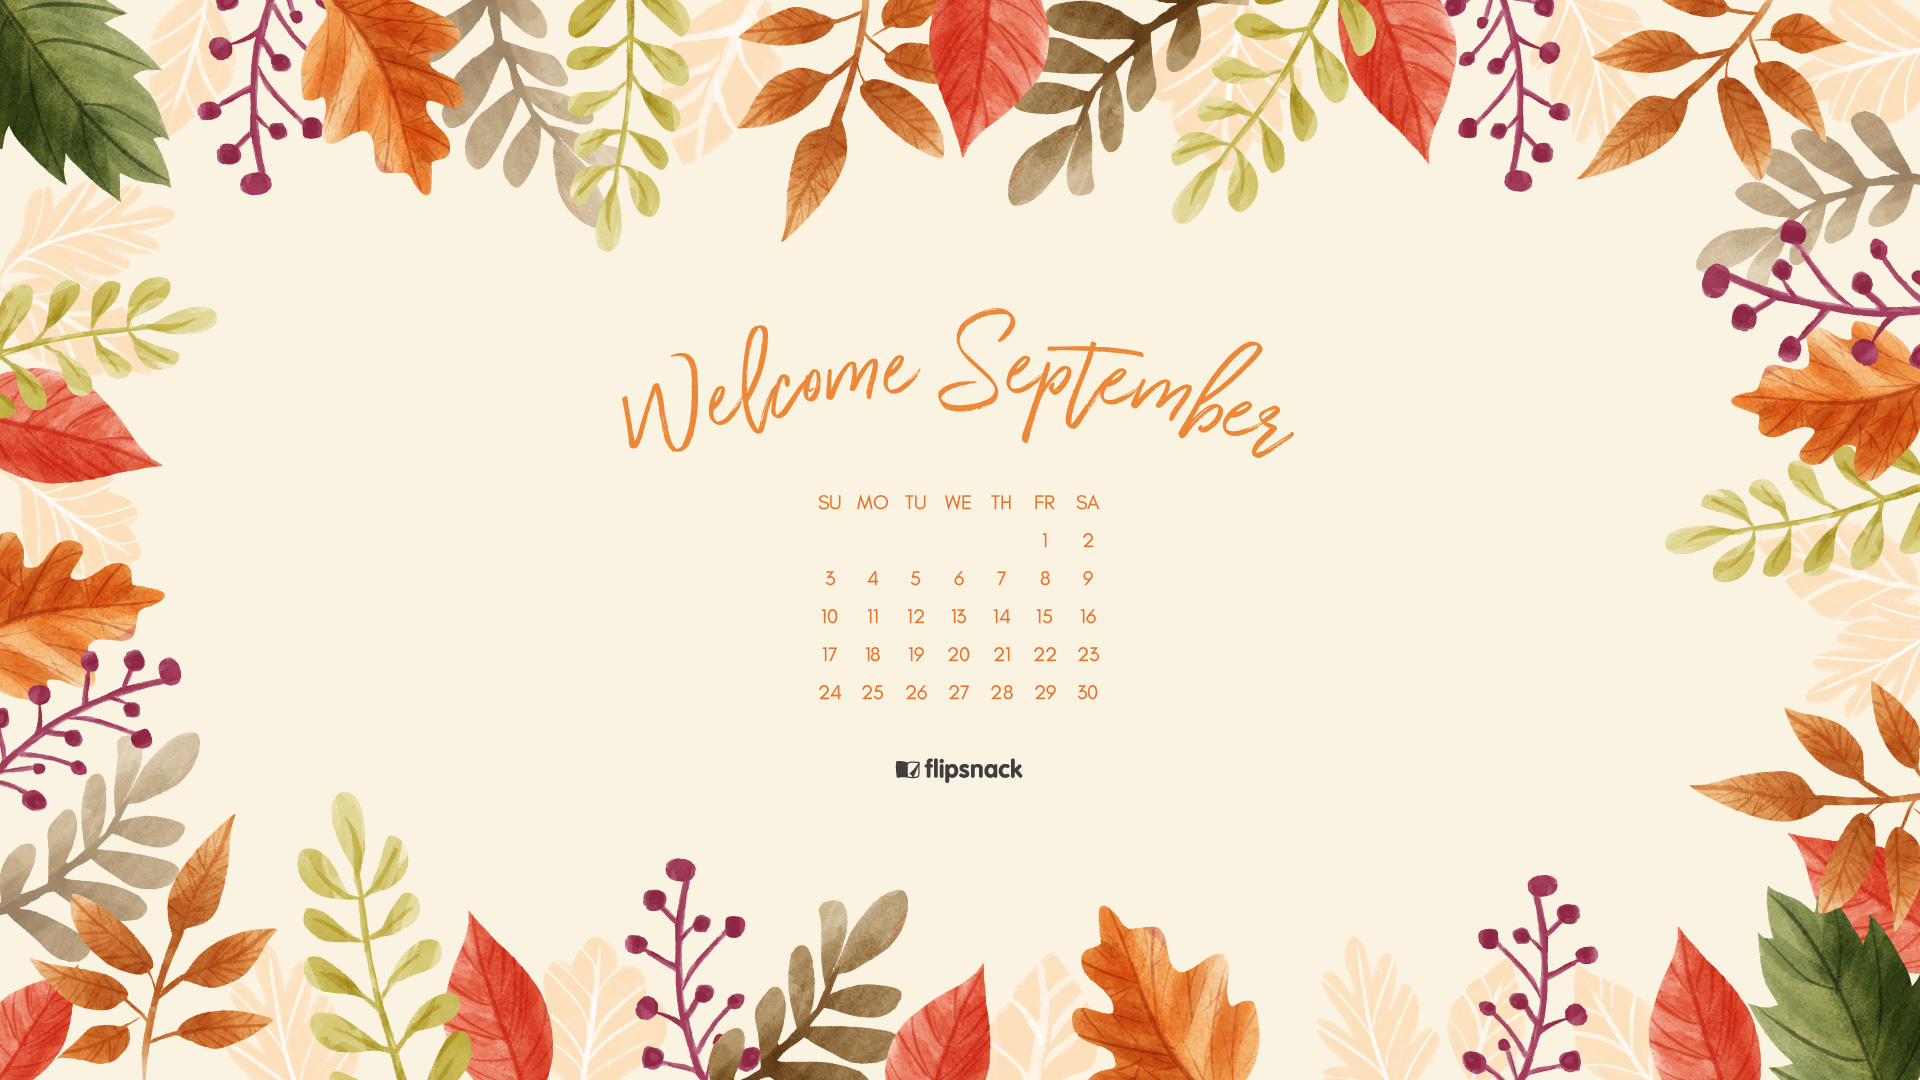 free-download-your-september-2017-calendar-wallpaper-is-here-get-it-1920x1080-for-your-desktop